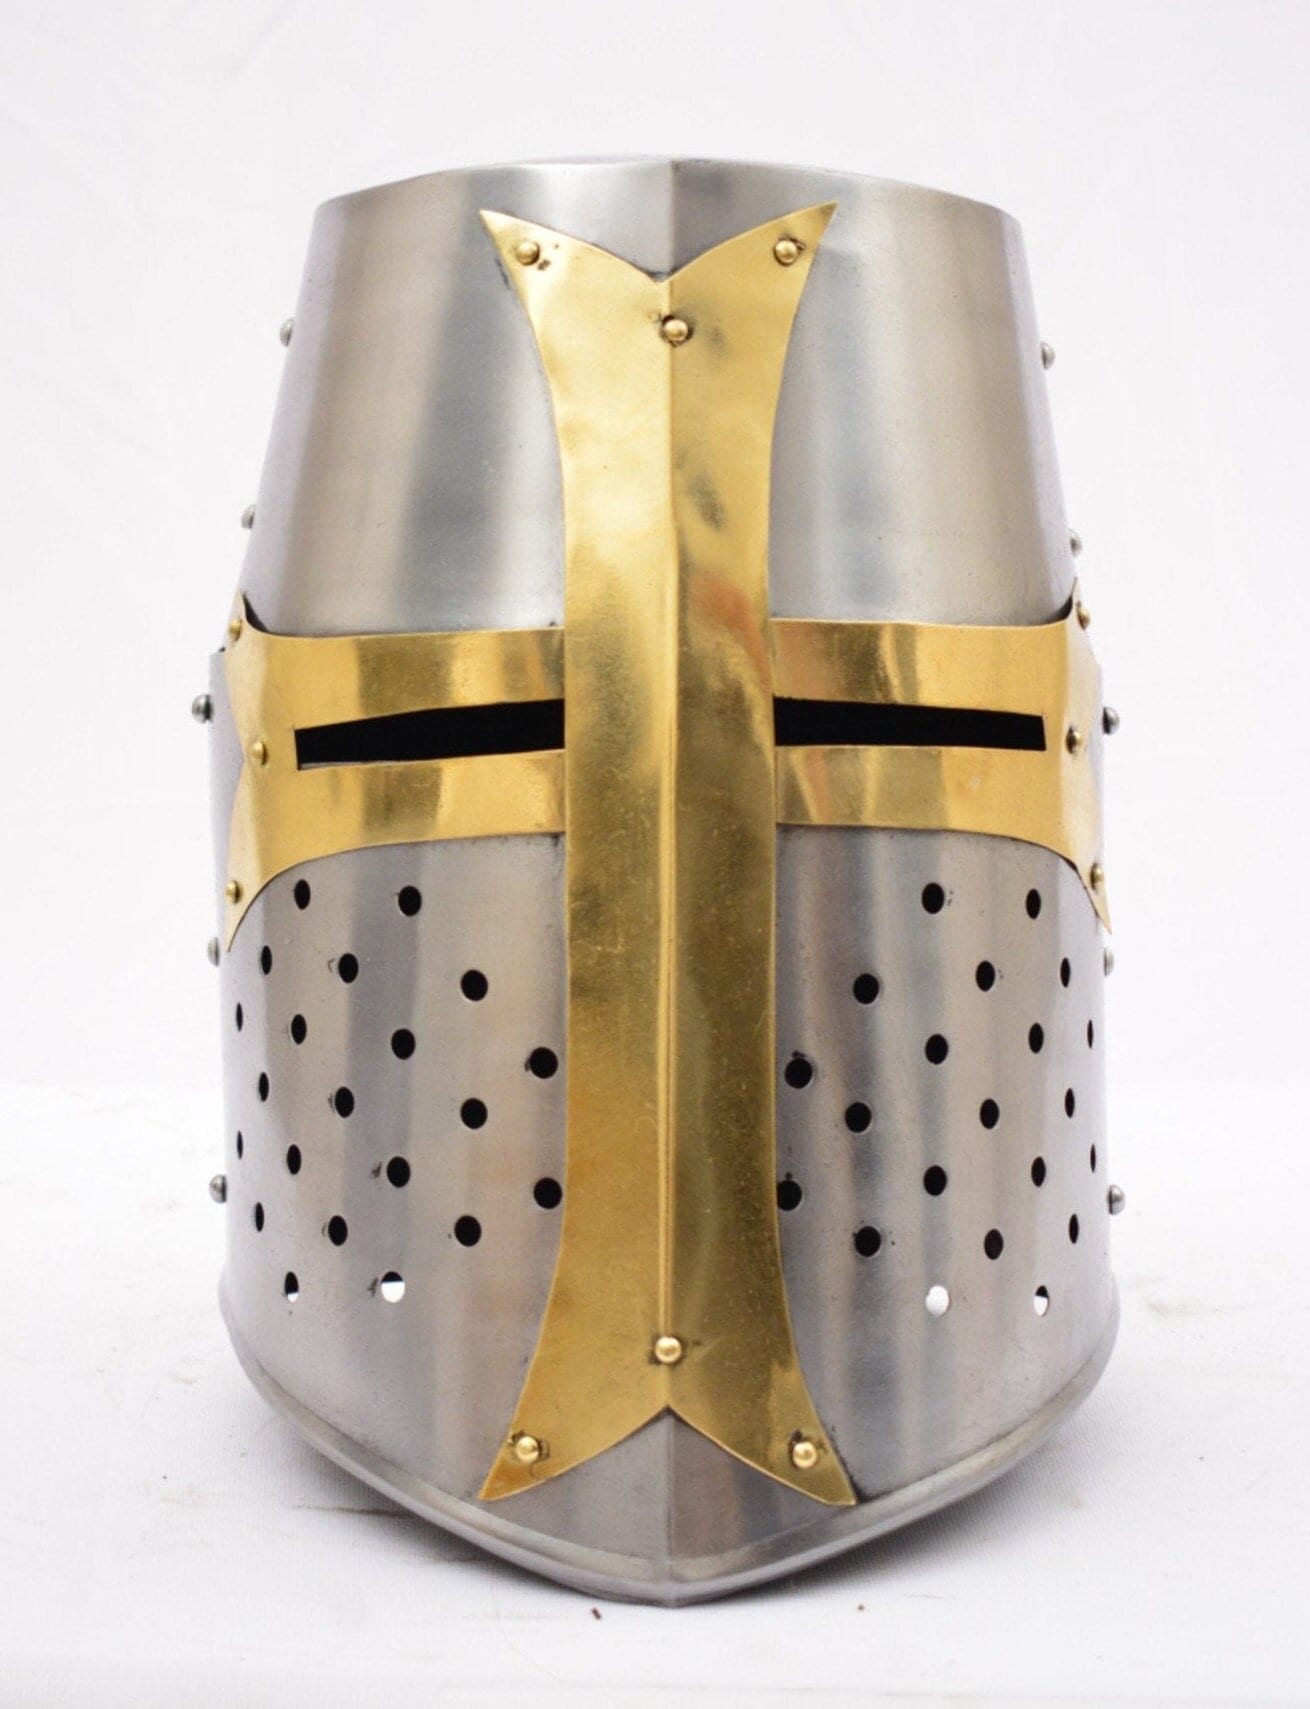 Details about   Medieval Crusader Helmet Templar Knight Helmet Silver Colored Brass Design Linin 